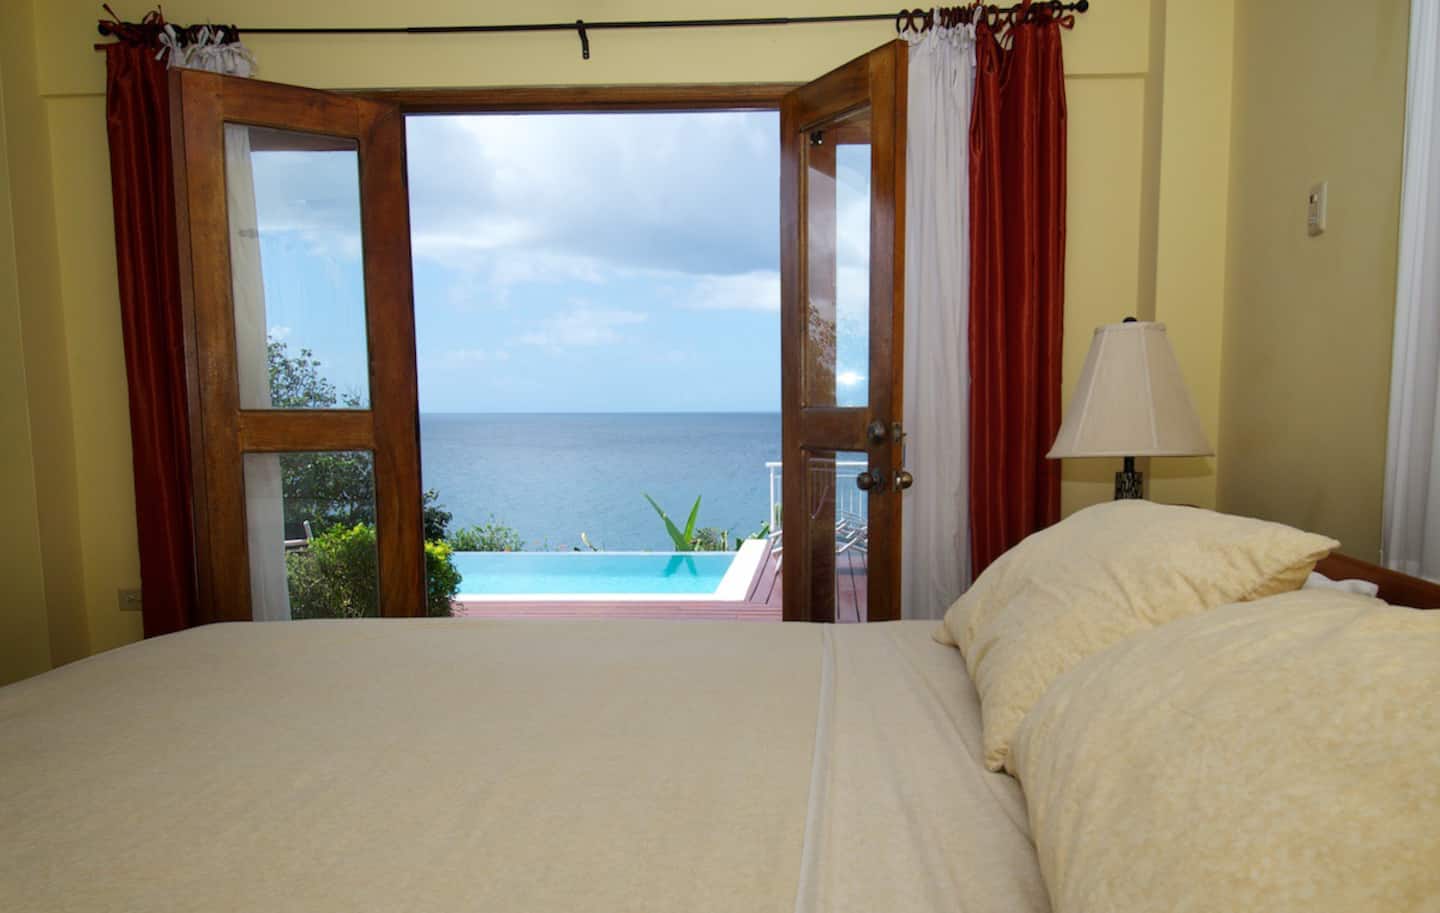 Mot Mot Luxury Lodge Bedroom Guest Houses In Tobago 